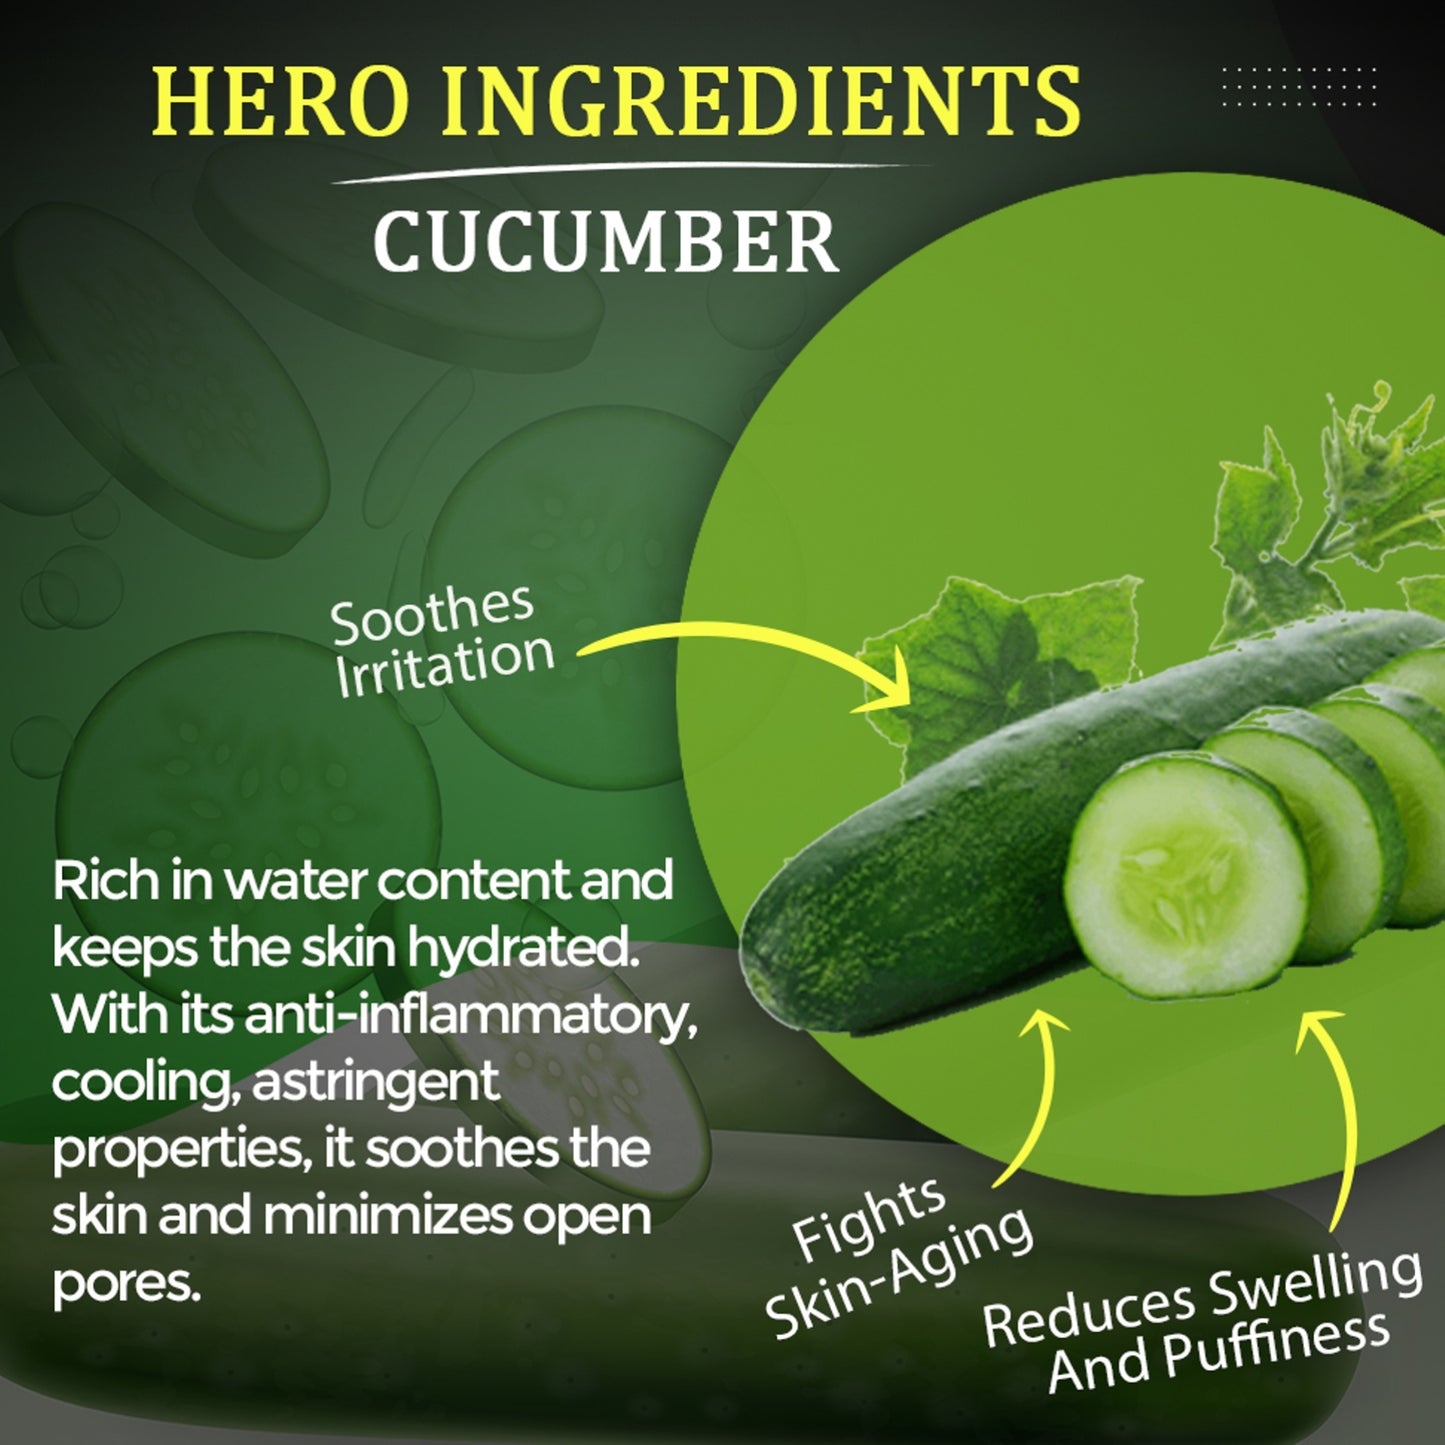 Luvyh Cucumber Face Gel- 100gm